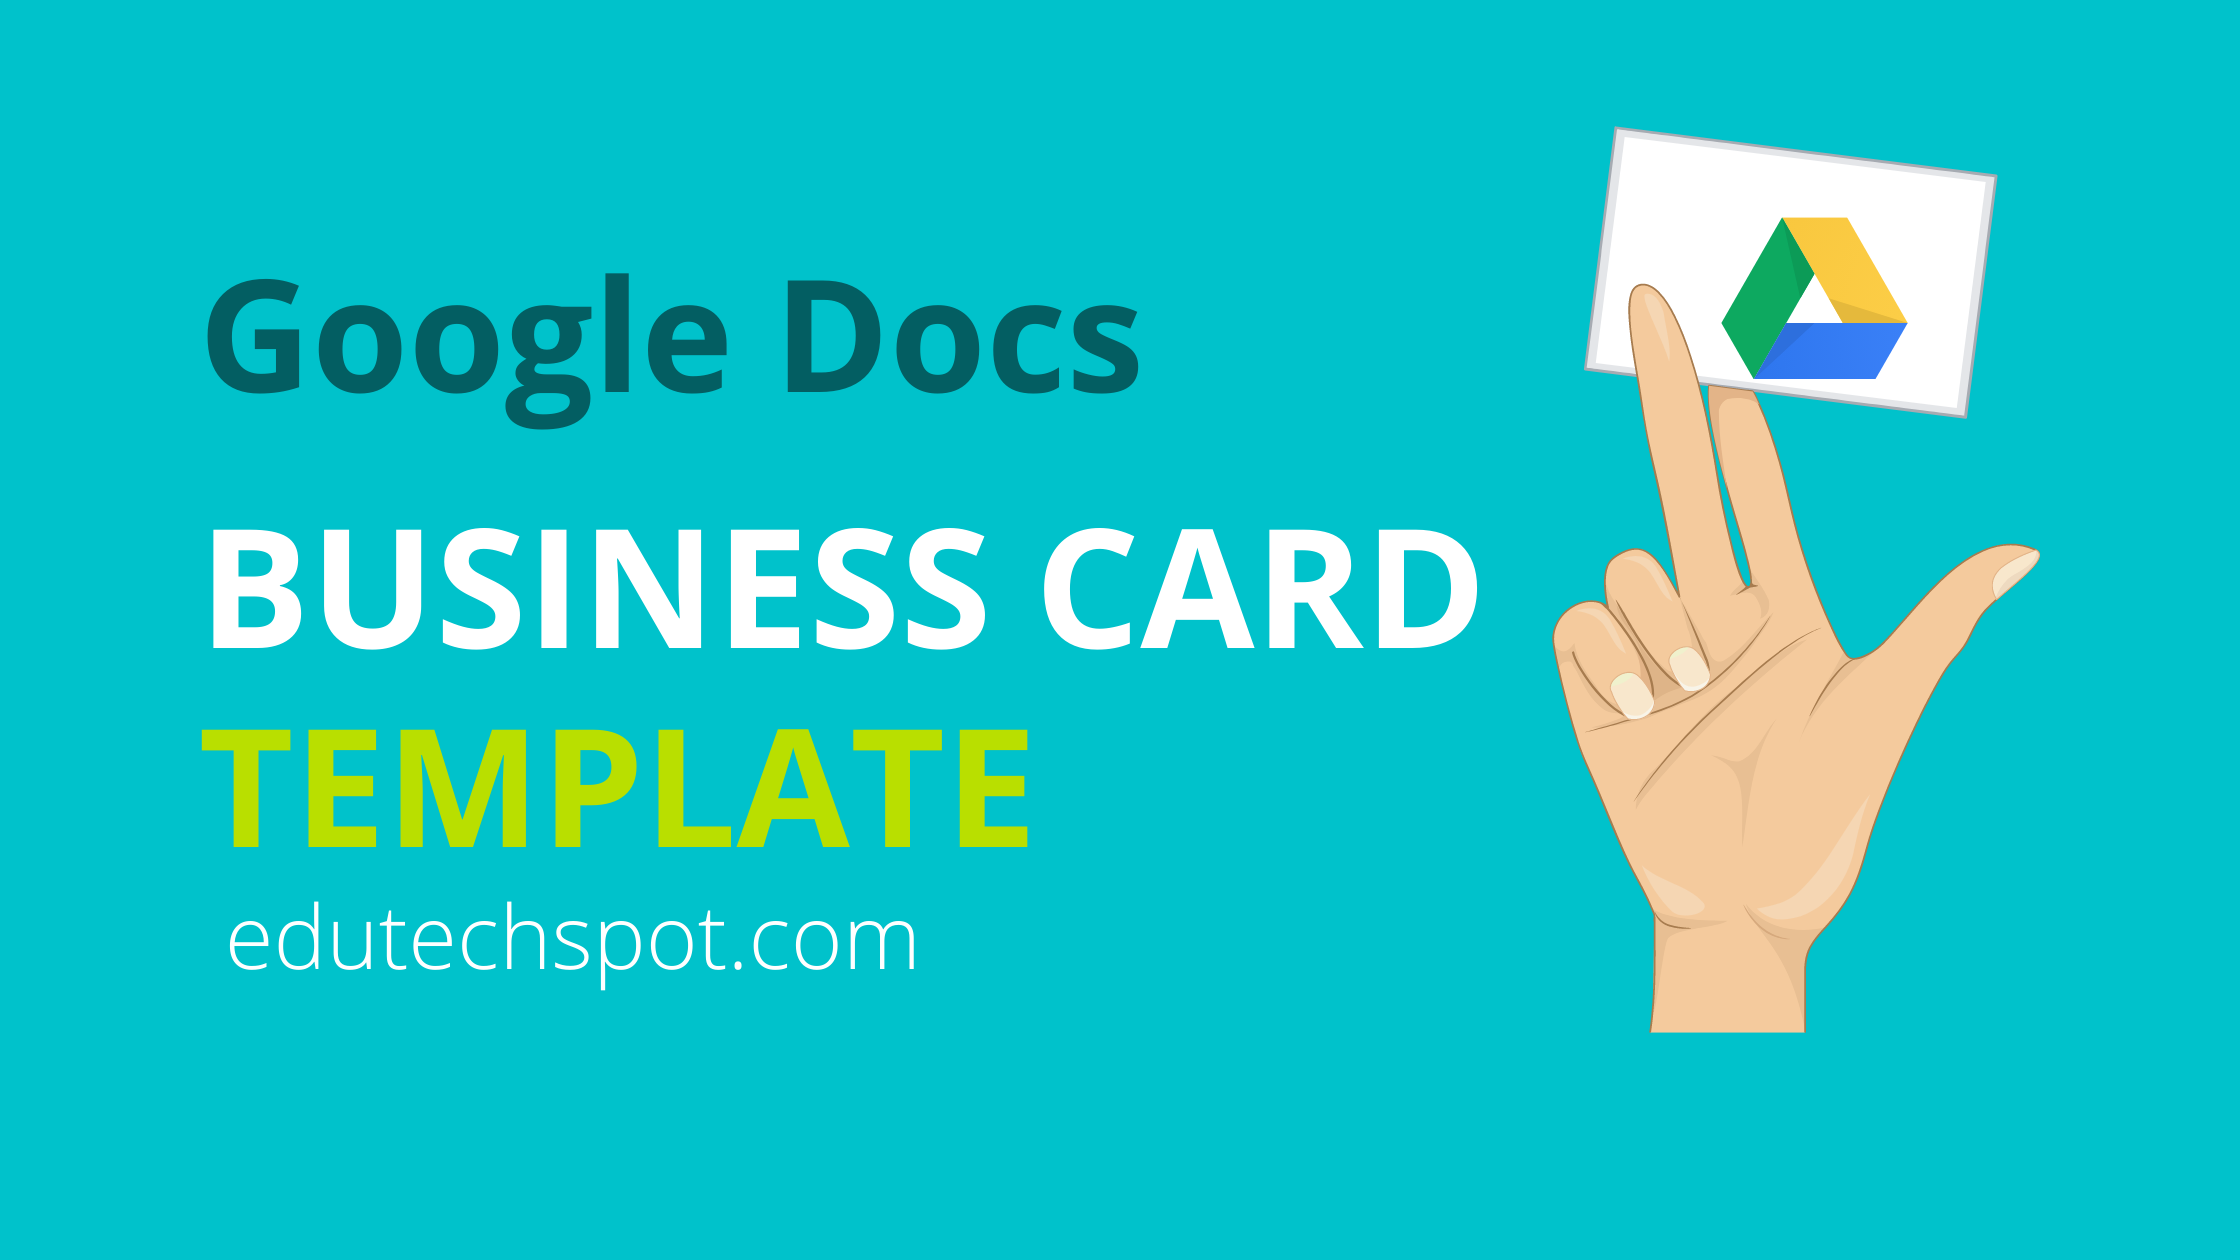 Google Docs Business Card Template FREE Edutechspot com